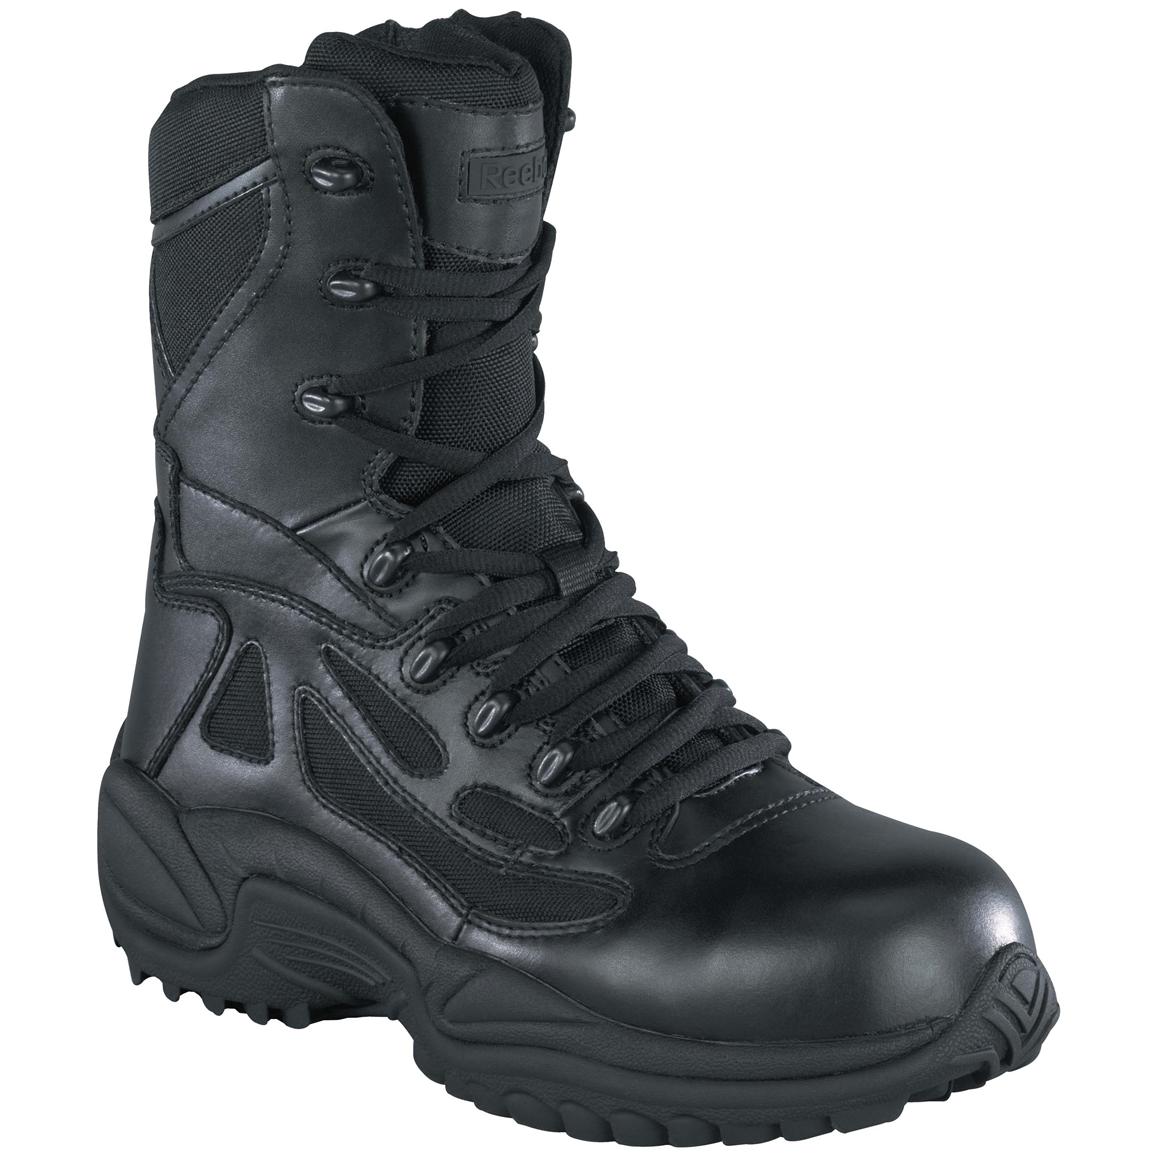 Men's Reebok 8" Stealth Composite Toe Side-Zip Tactical Boots, Black